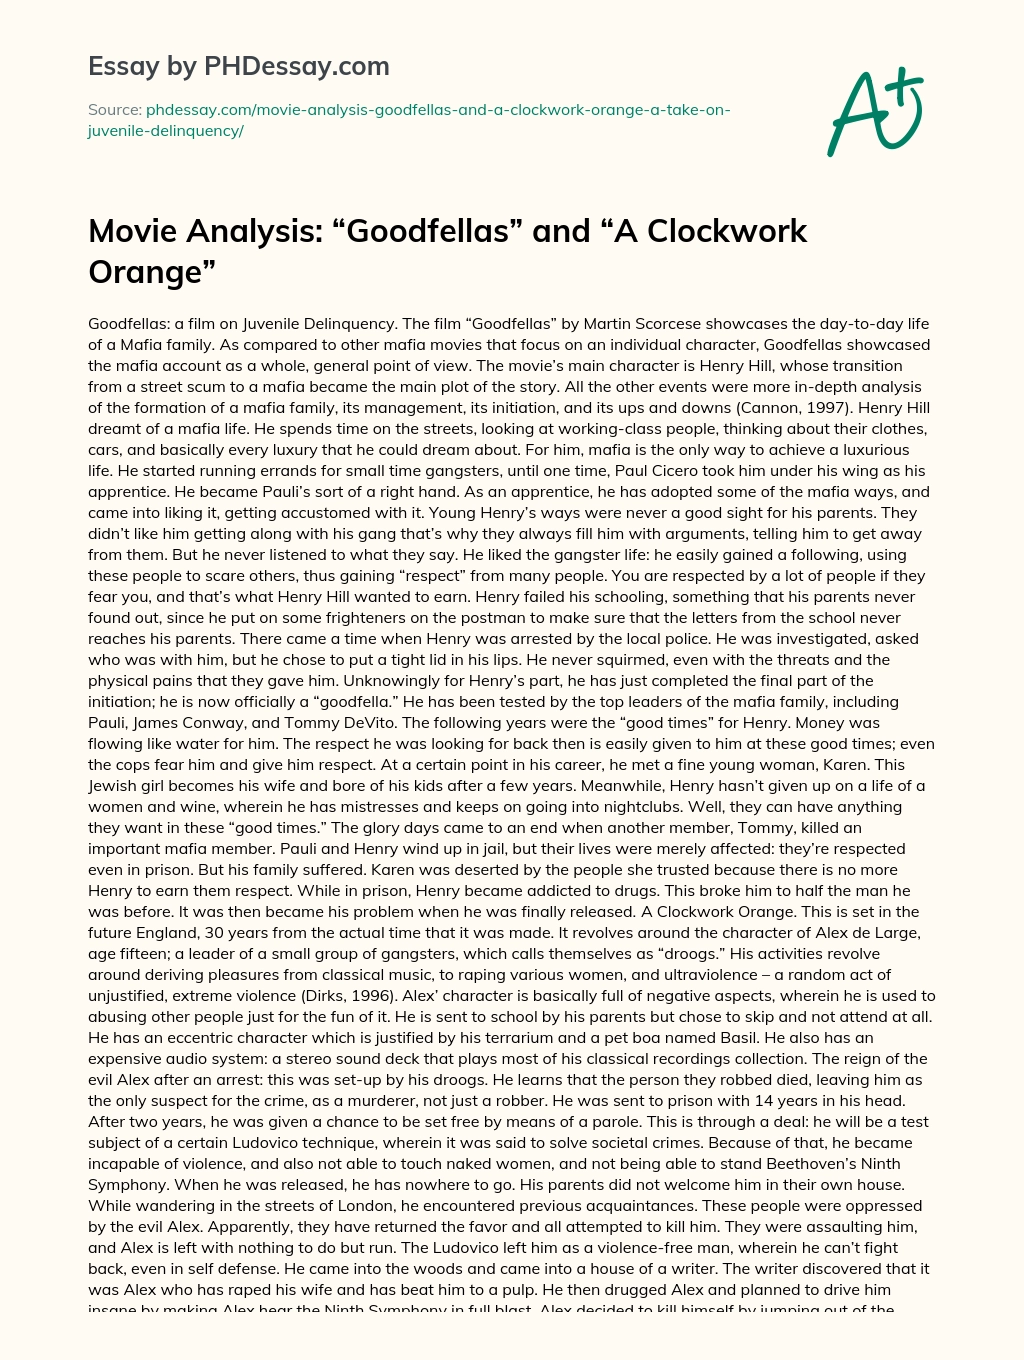 Movie Analysis: “Goodfellas” and  “A Clockwork Orange” essay